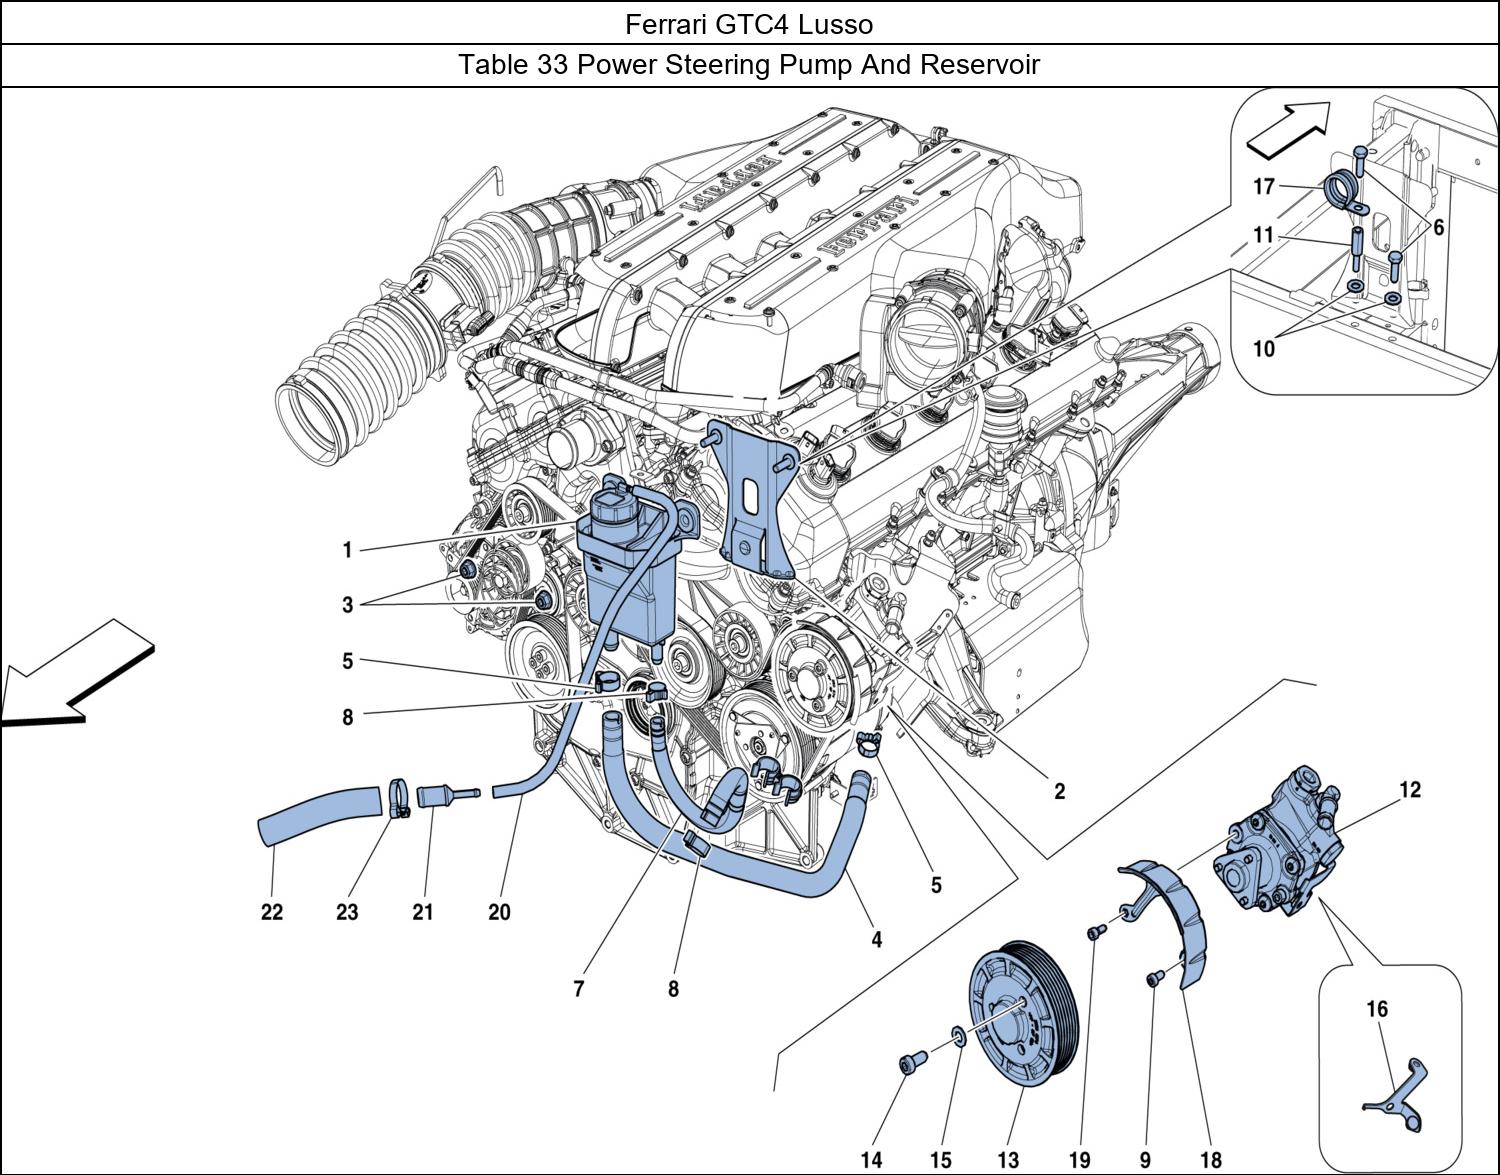 Ferrari Parts Ferrari GTC4 Lusso Table 33 Power Steering Pump And Reservoir